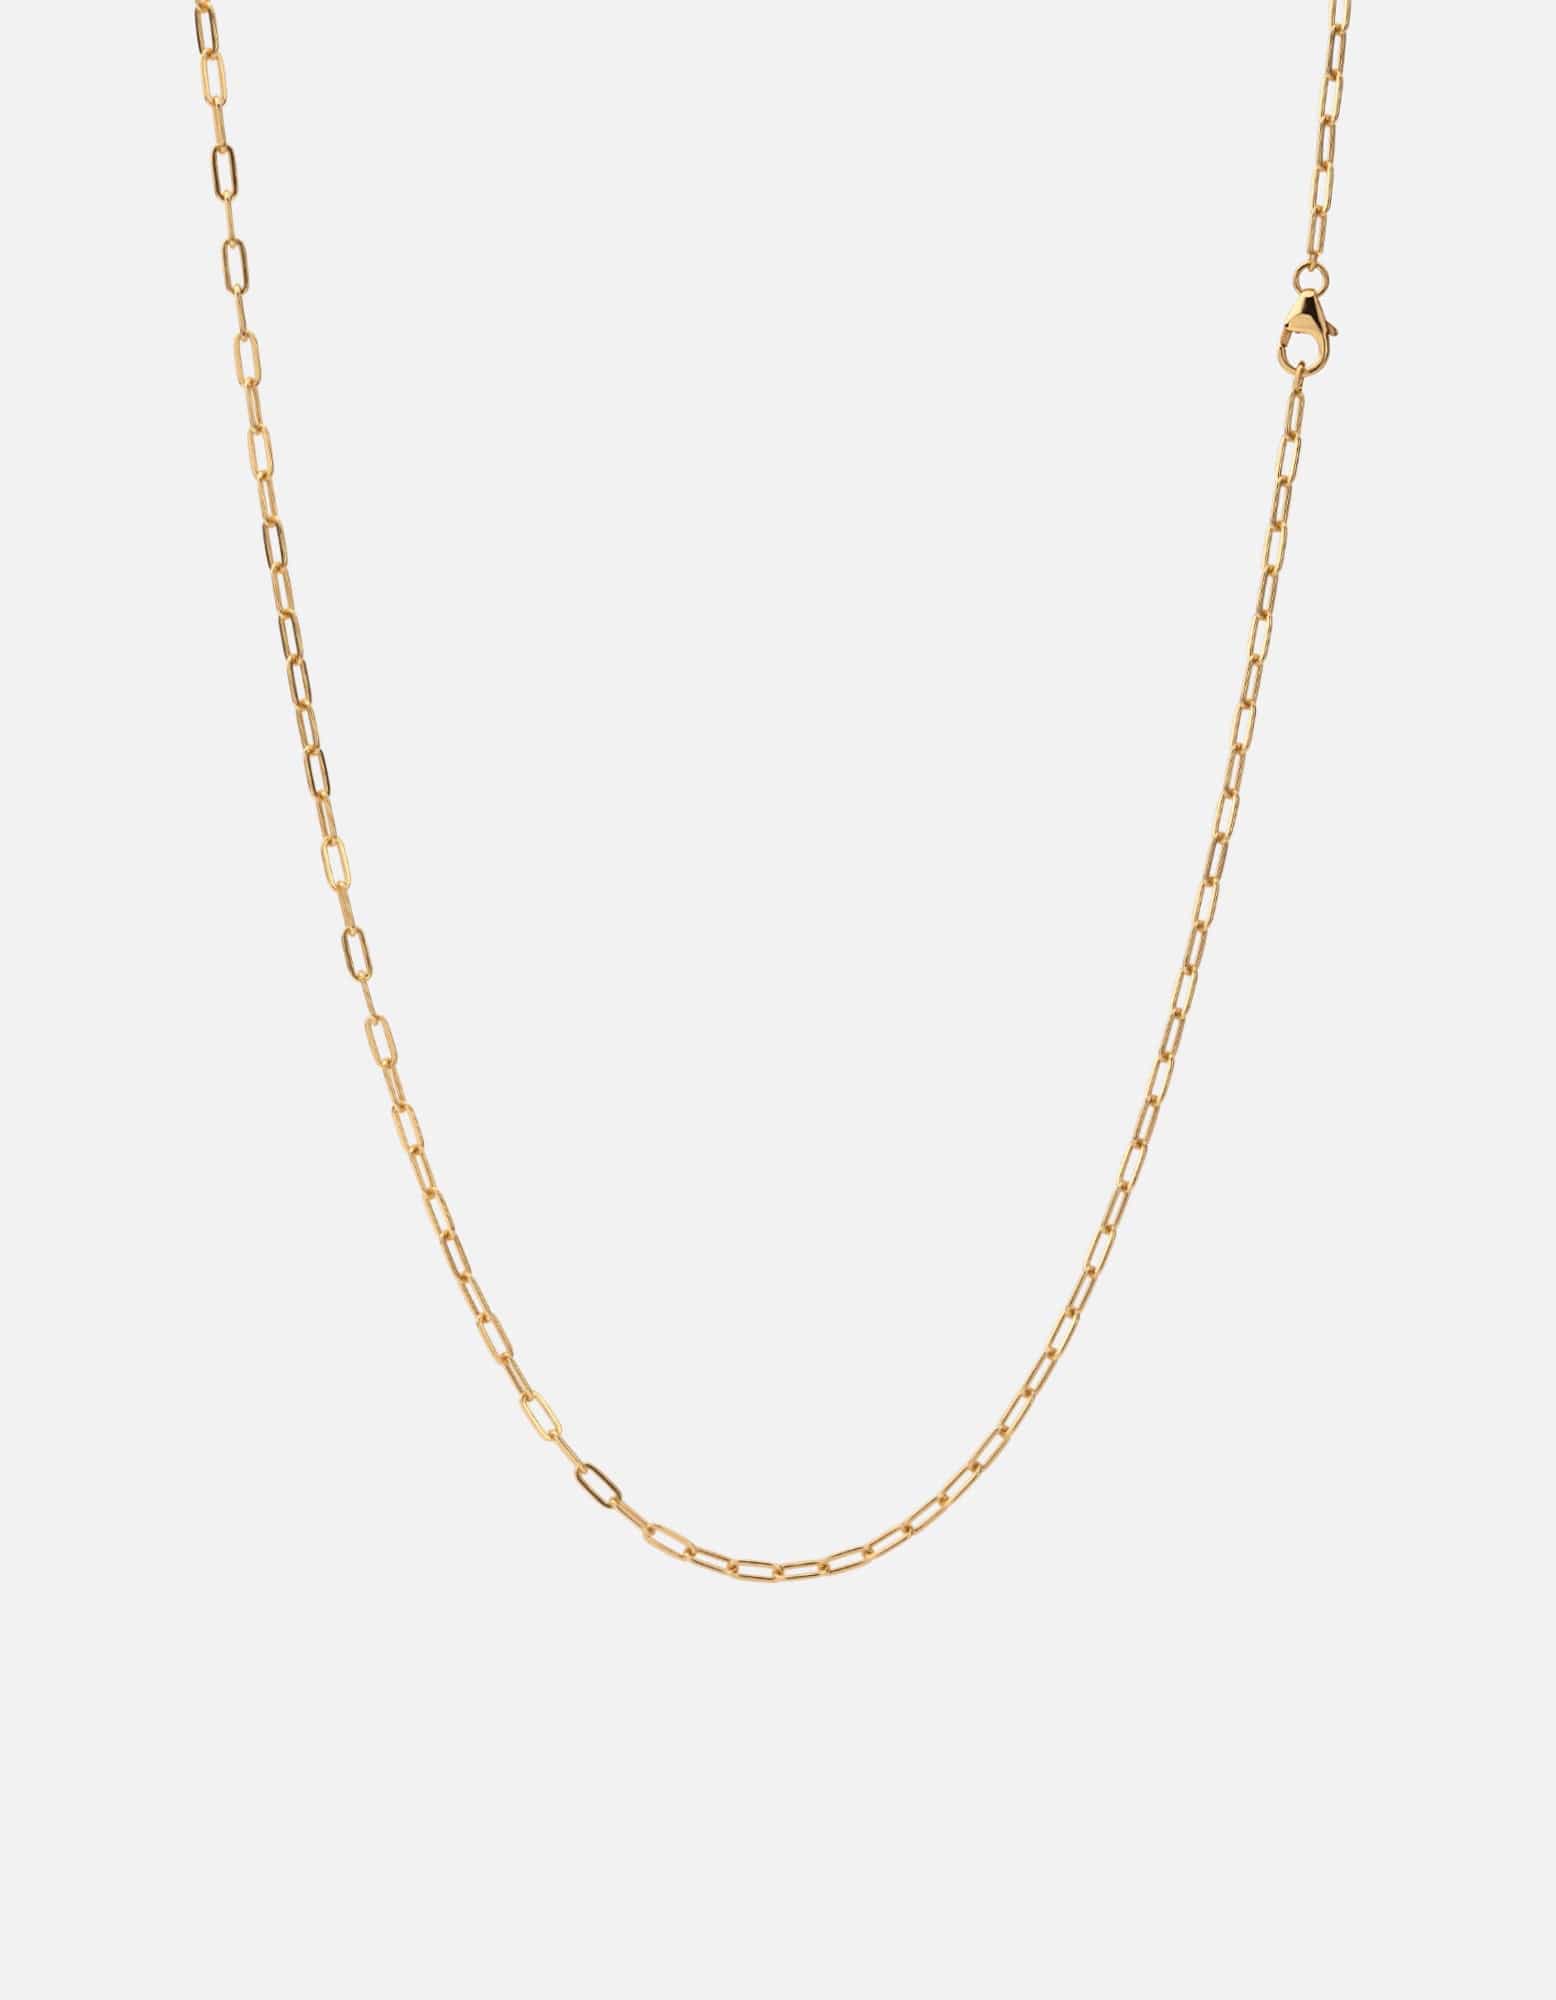 Miansai Men's 3mm Cuban Chain Necklace, Gold, Size 24 in.